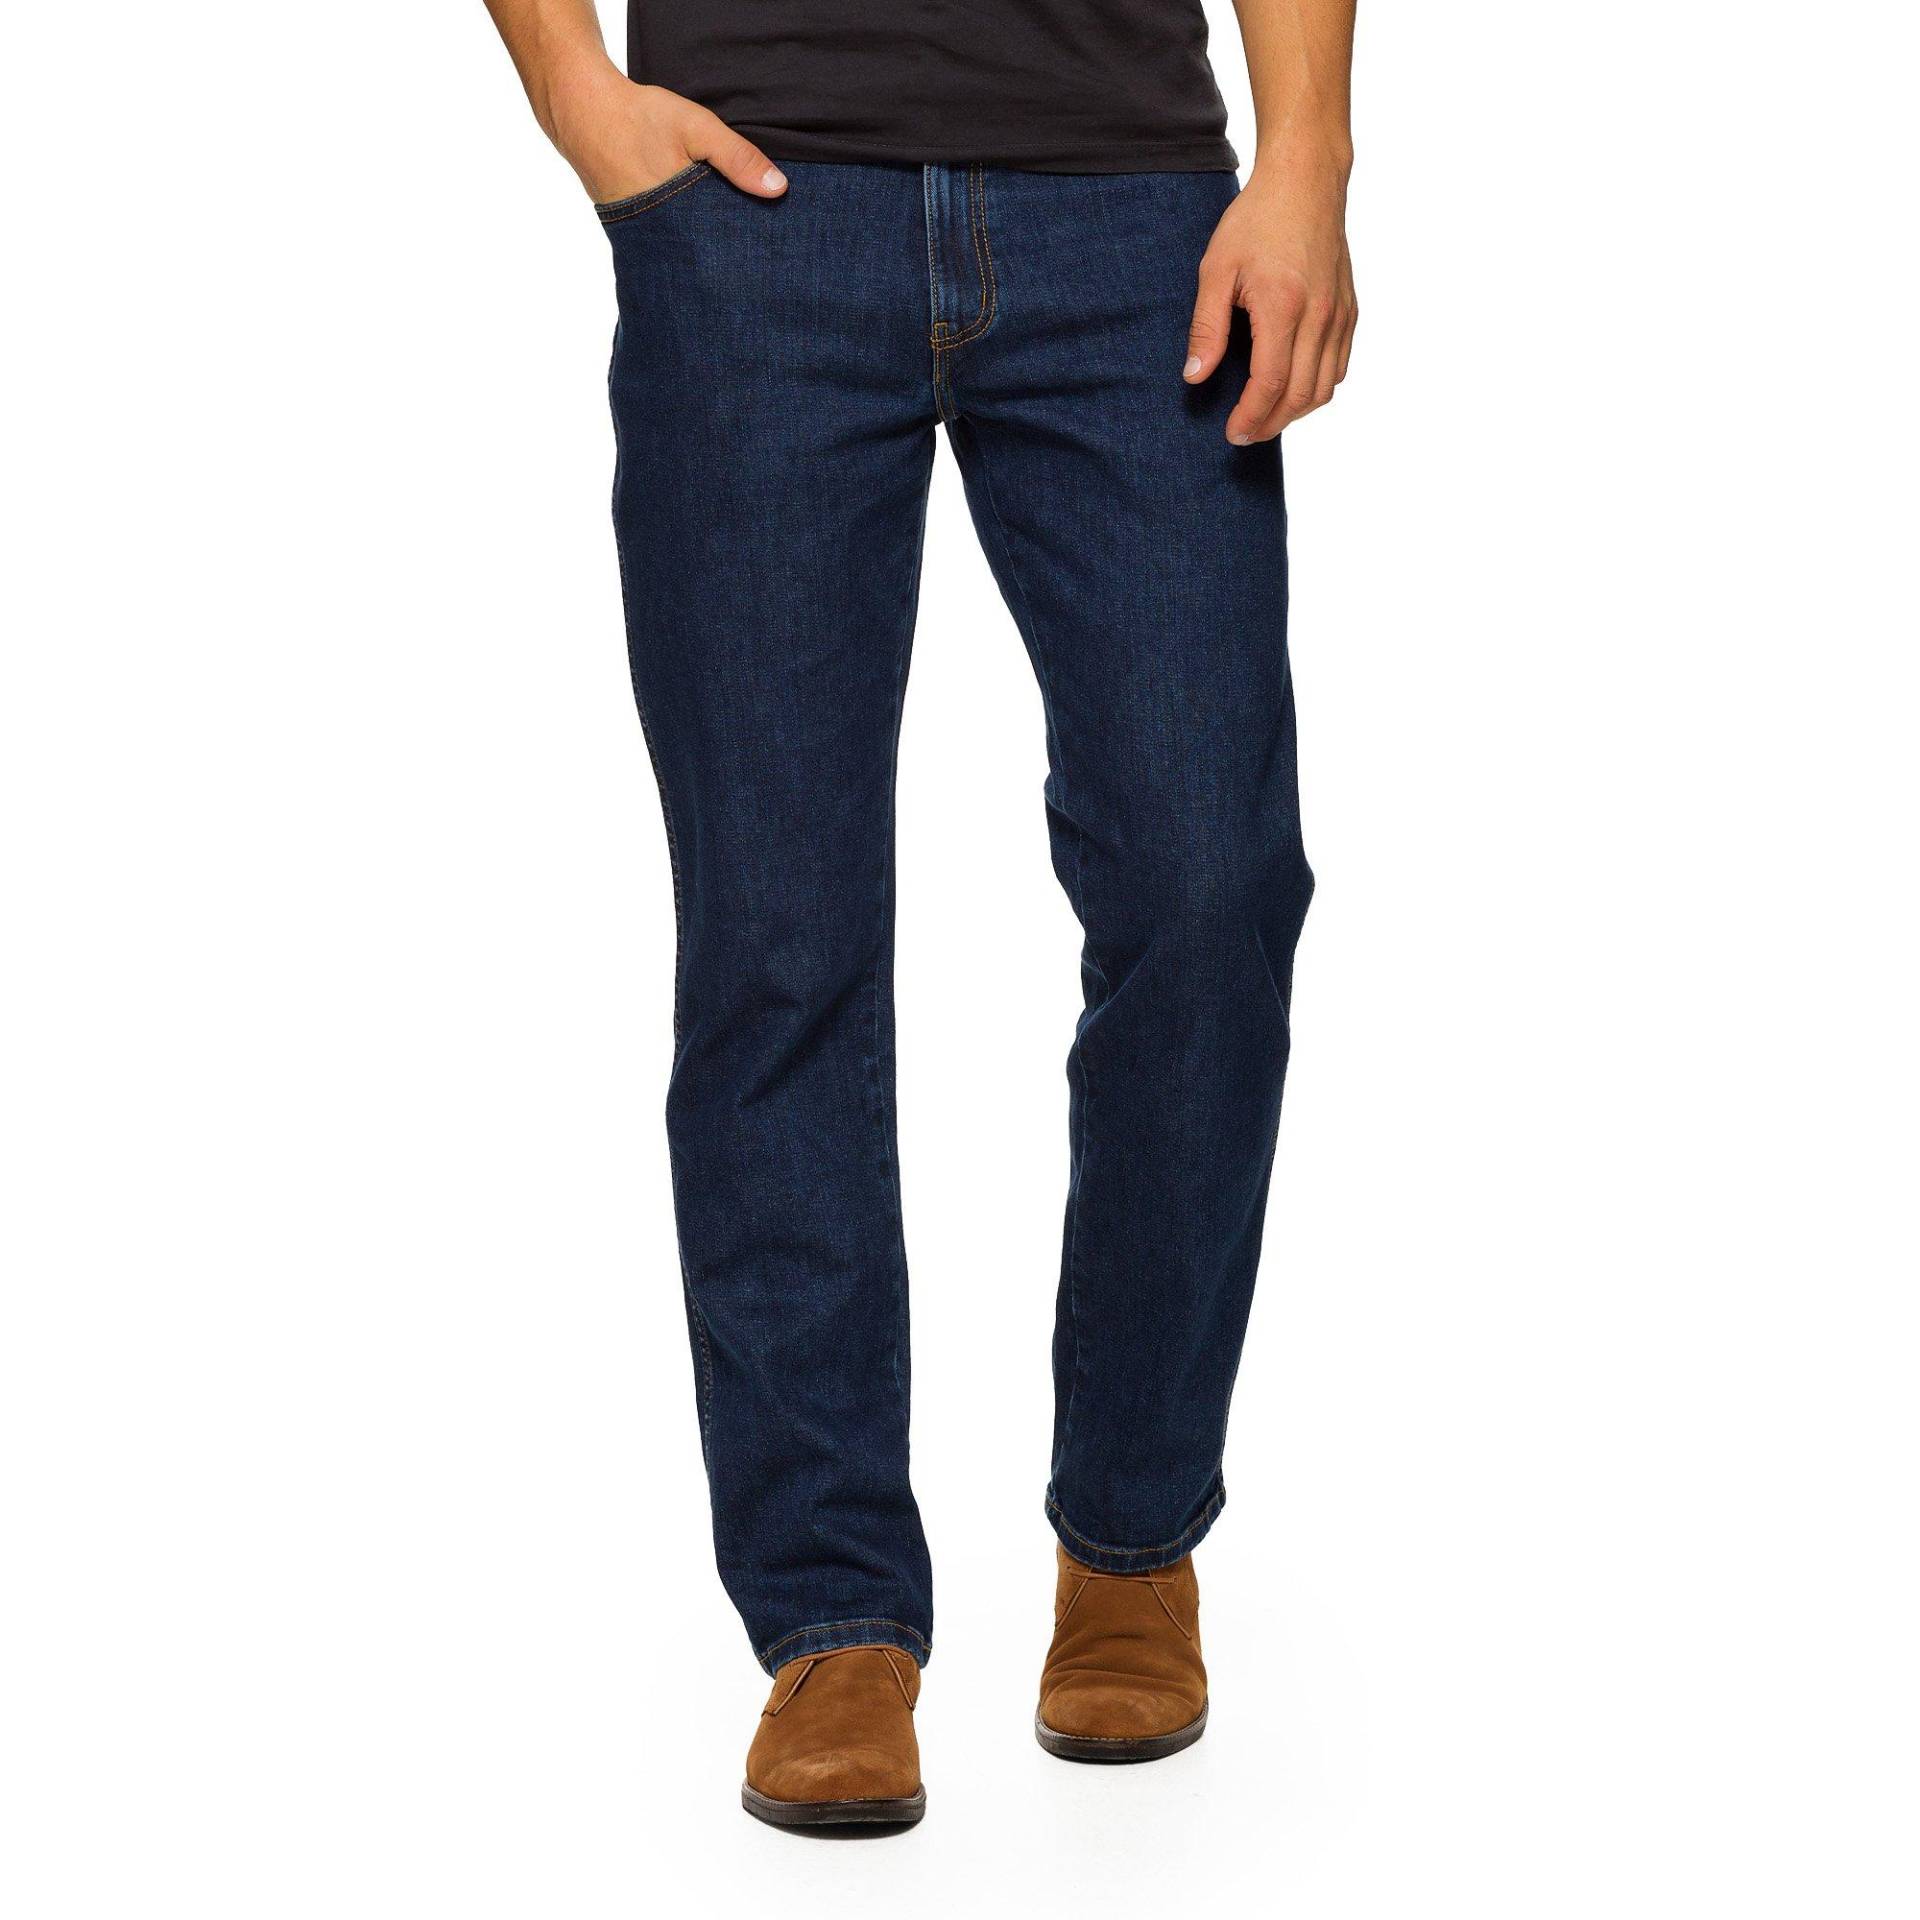 Jeans Straight Leg Texas Herren Blau Denim L36/W32 von Wrangler